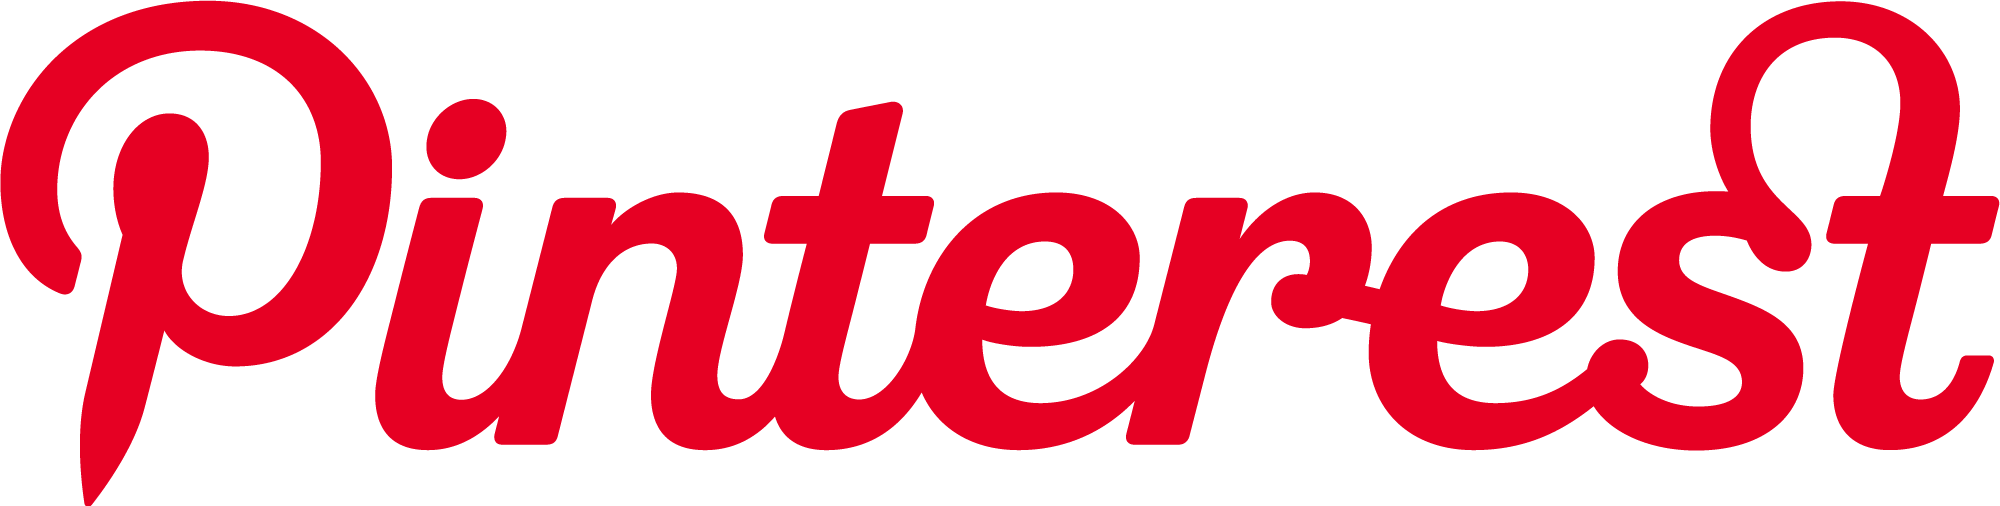 Pinterest Name Logo title=